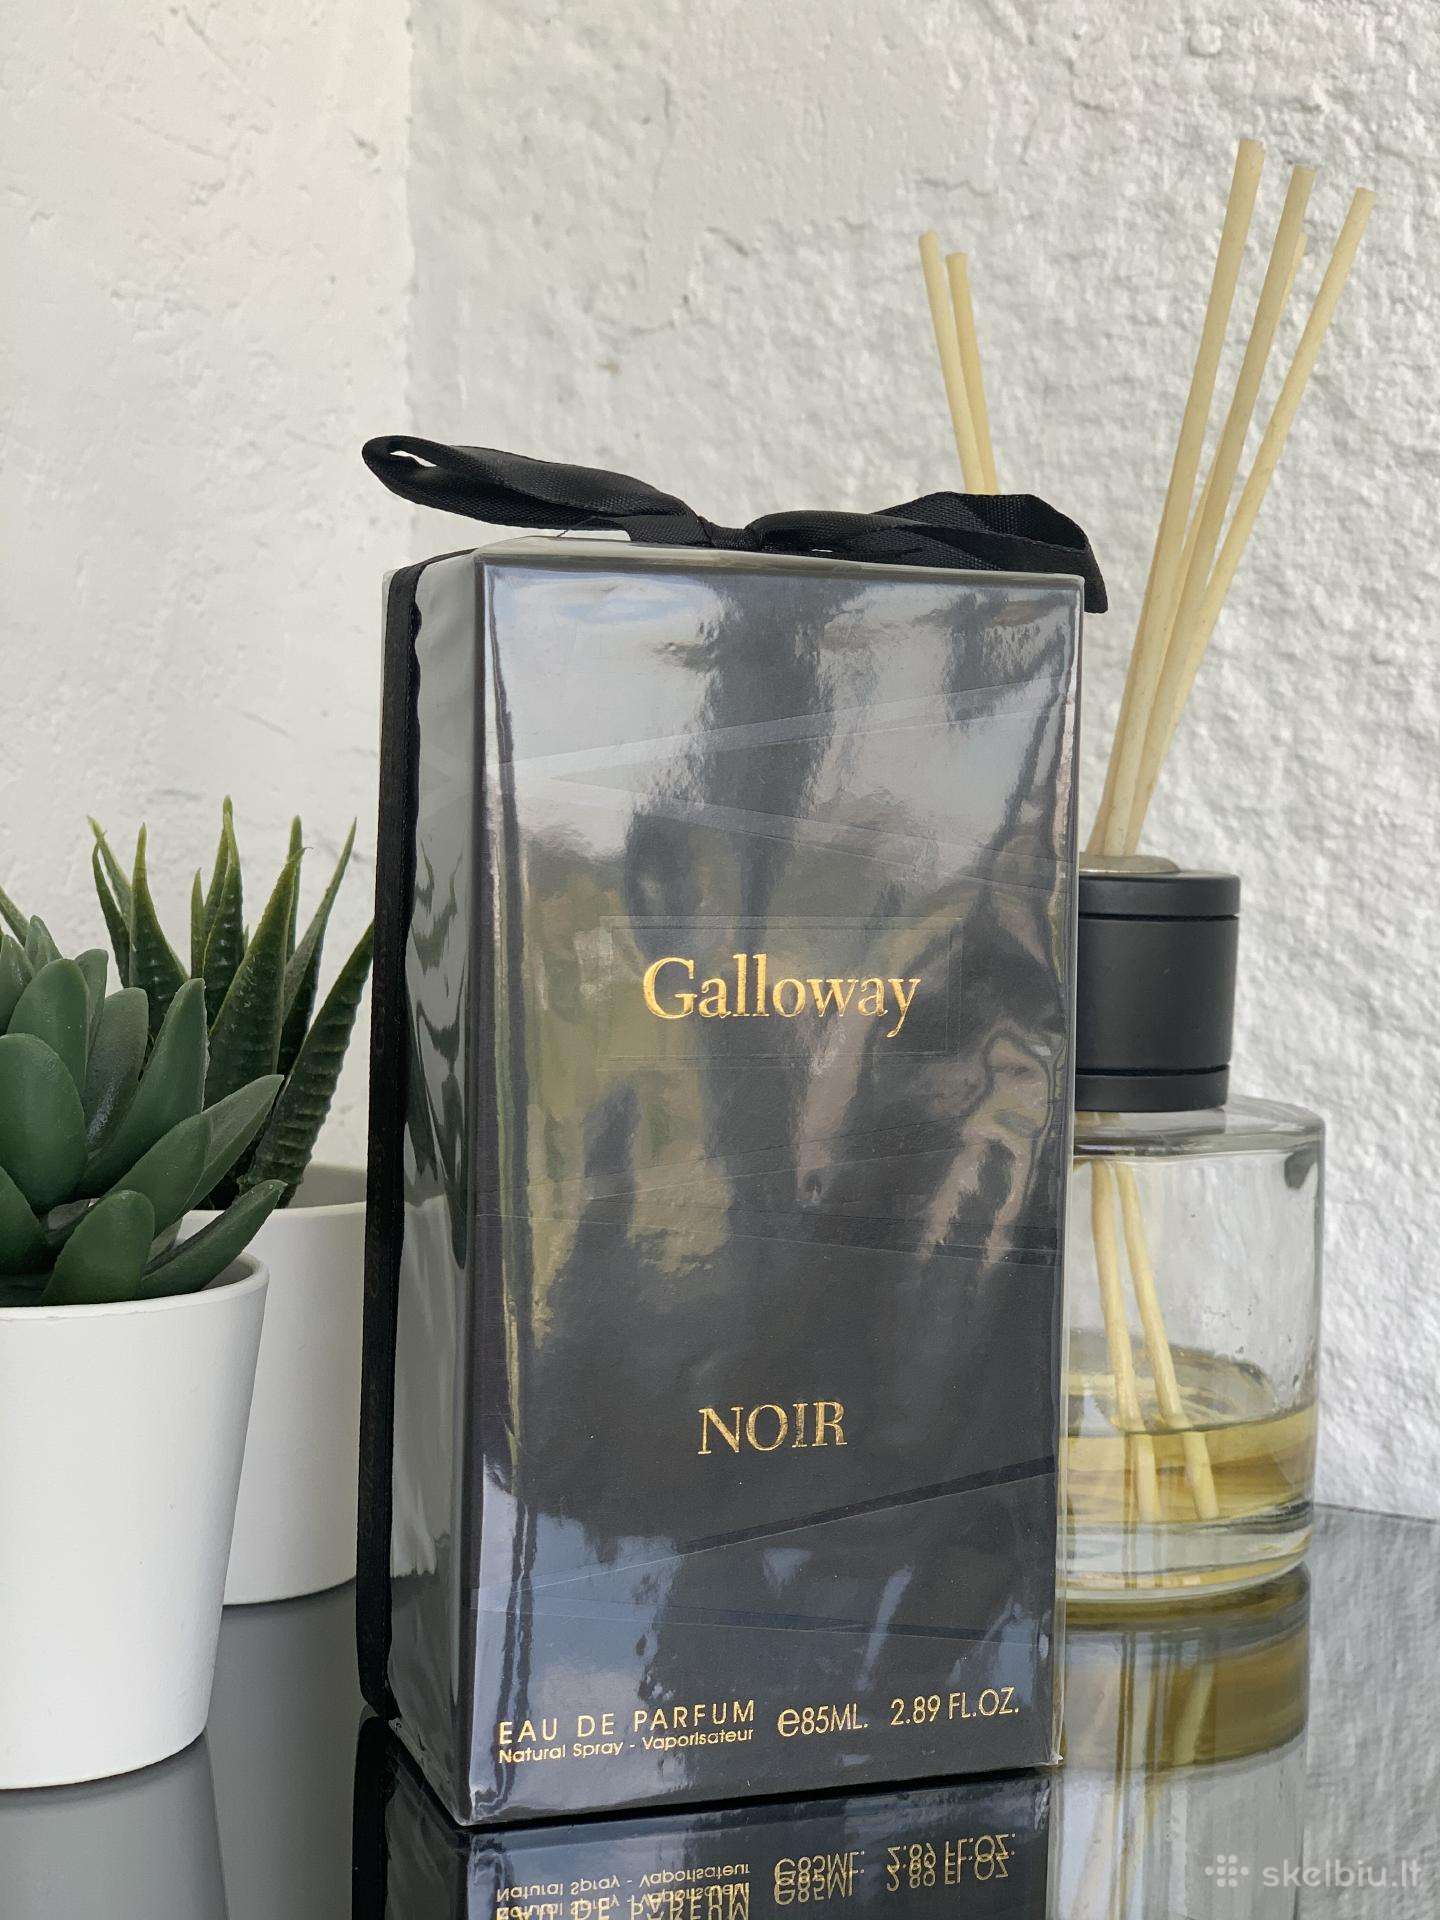 Galloway Noir by Fragrance World Eau de Parfum 85ml 2.89 fl oz